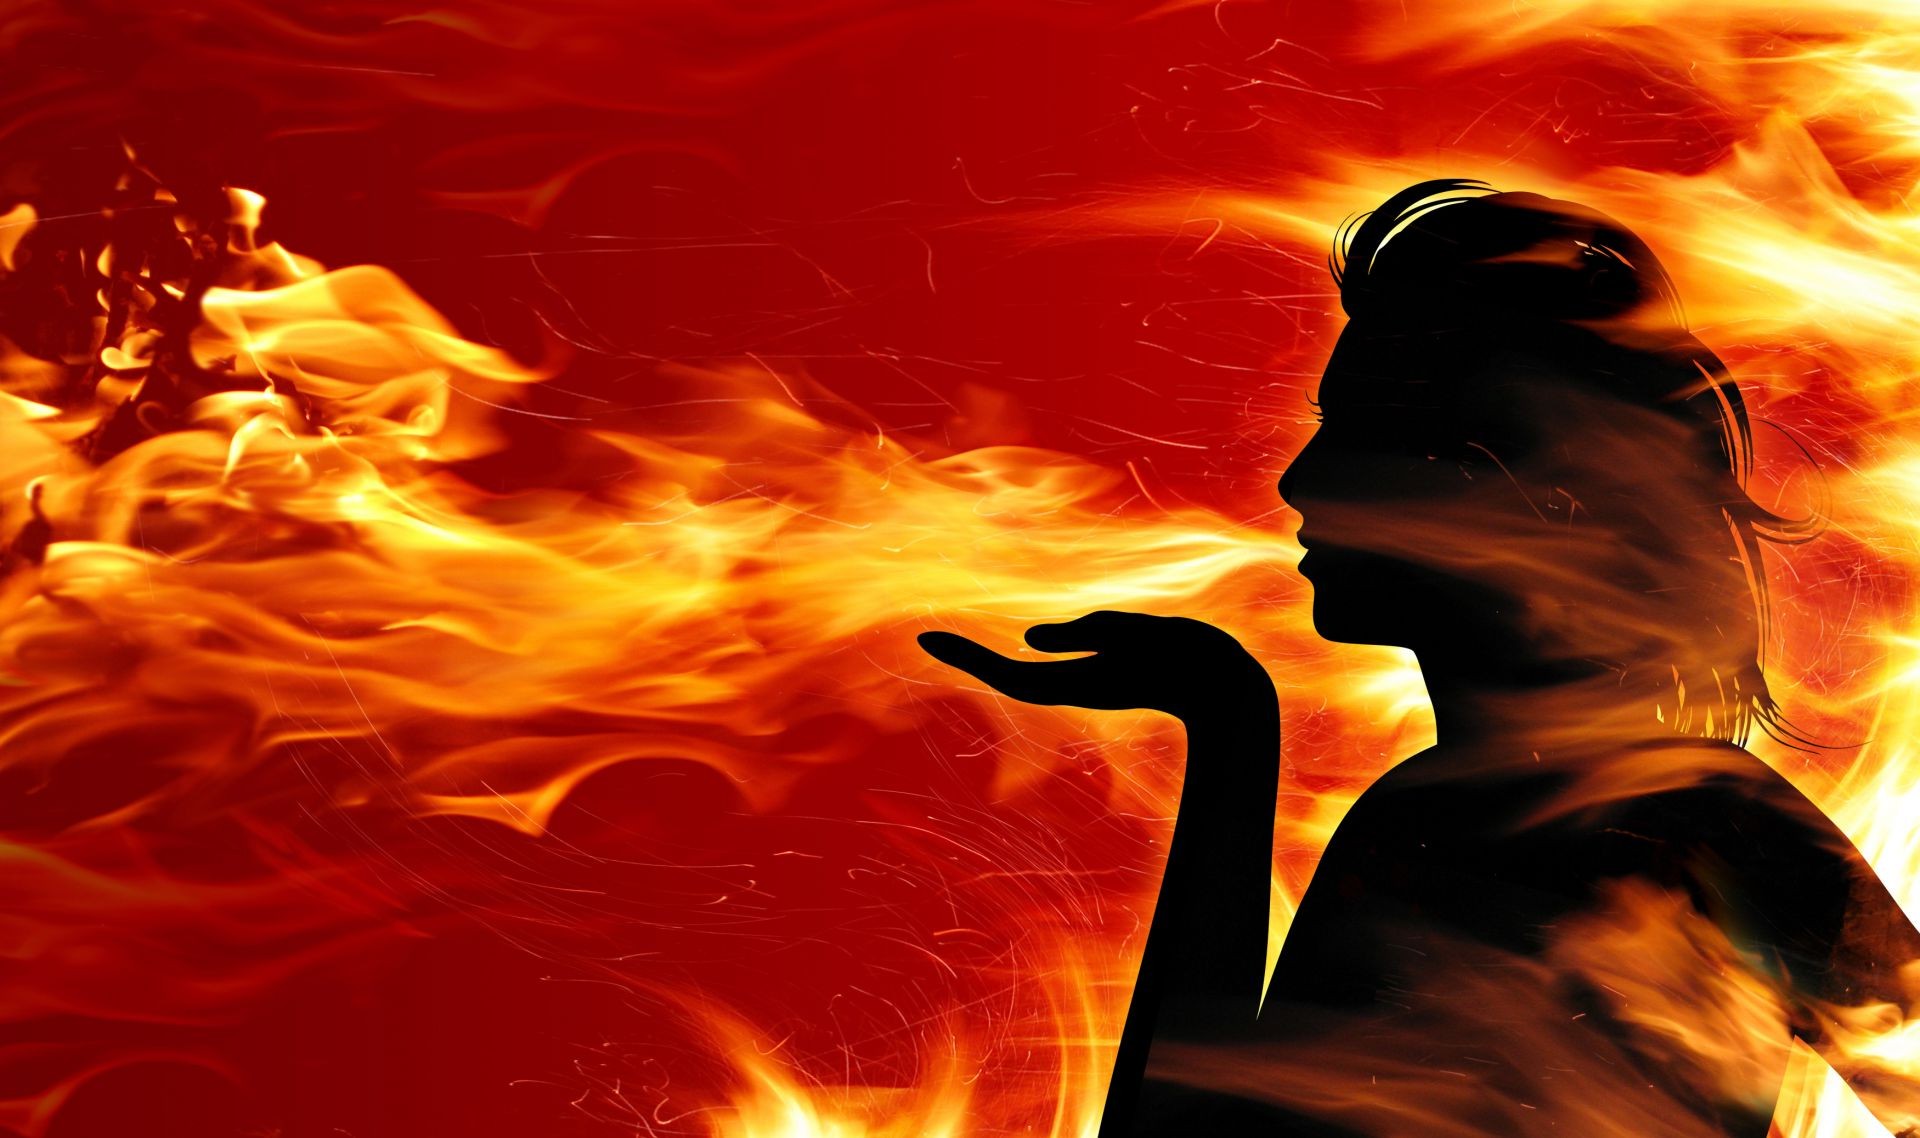 fire flame hot heat danger abstract energy burnt warmly smoke blaze inferno motion